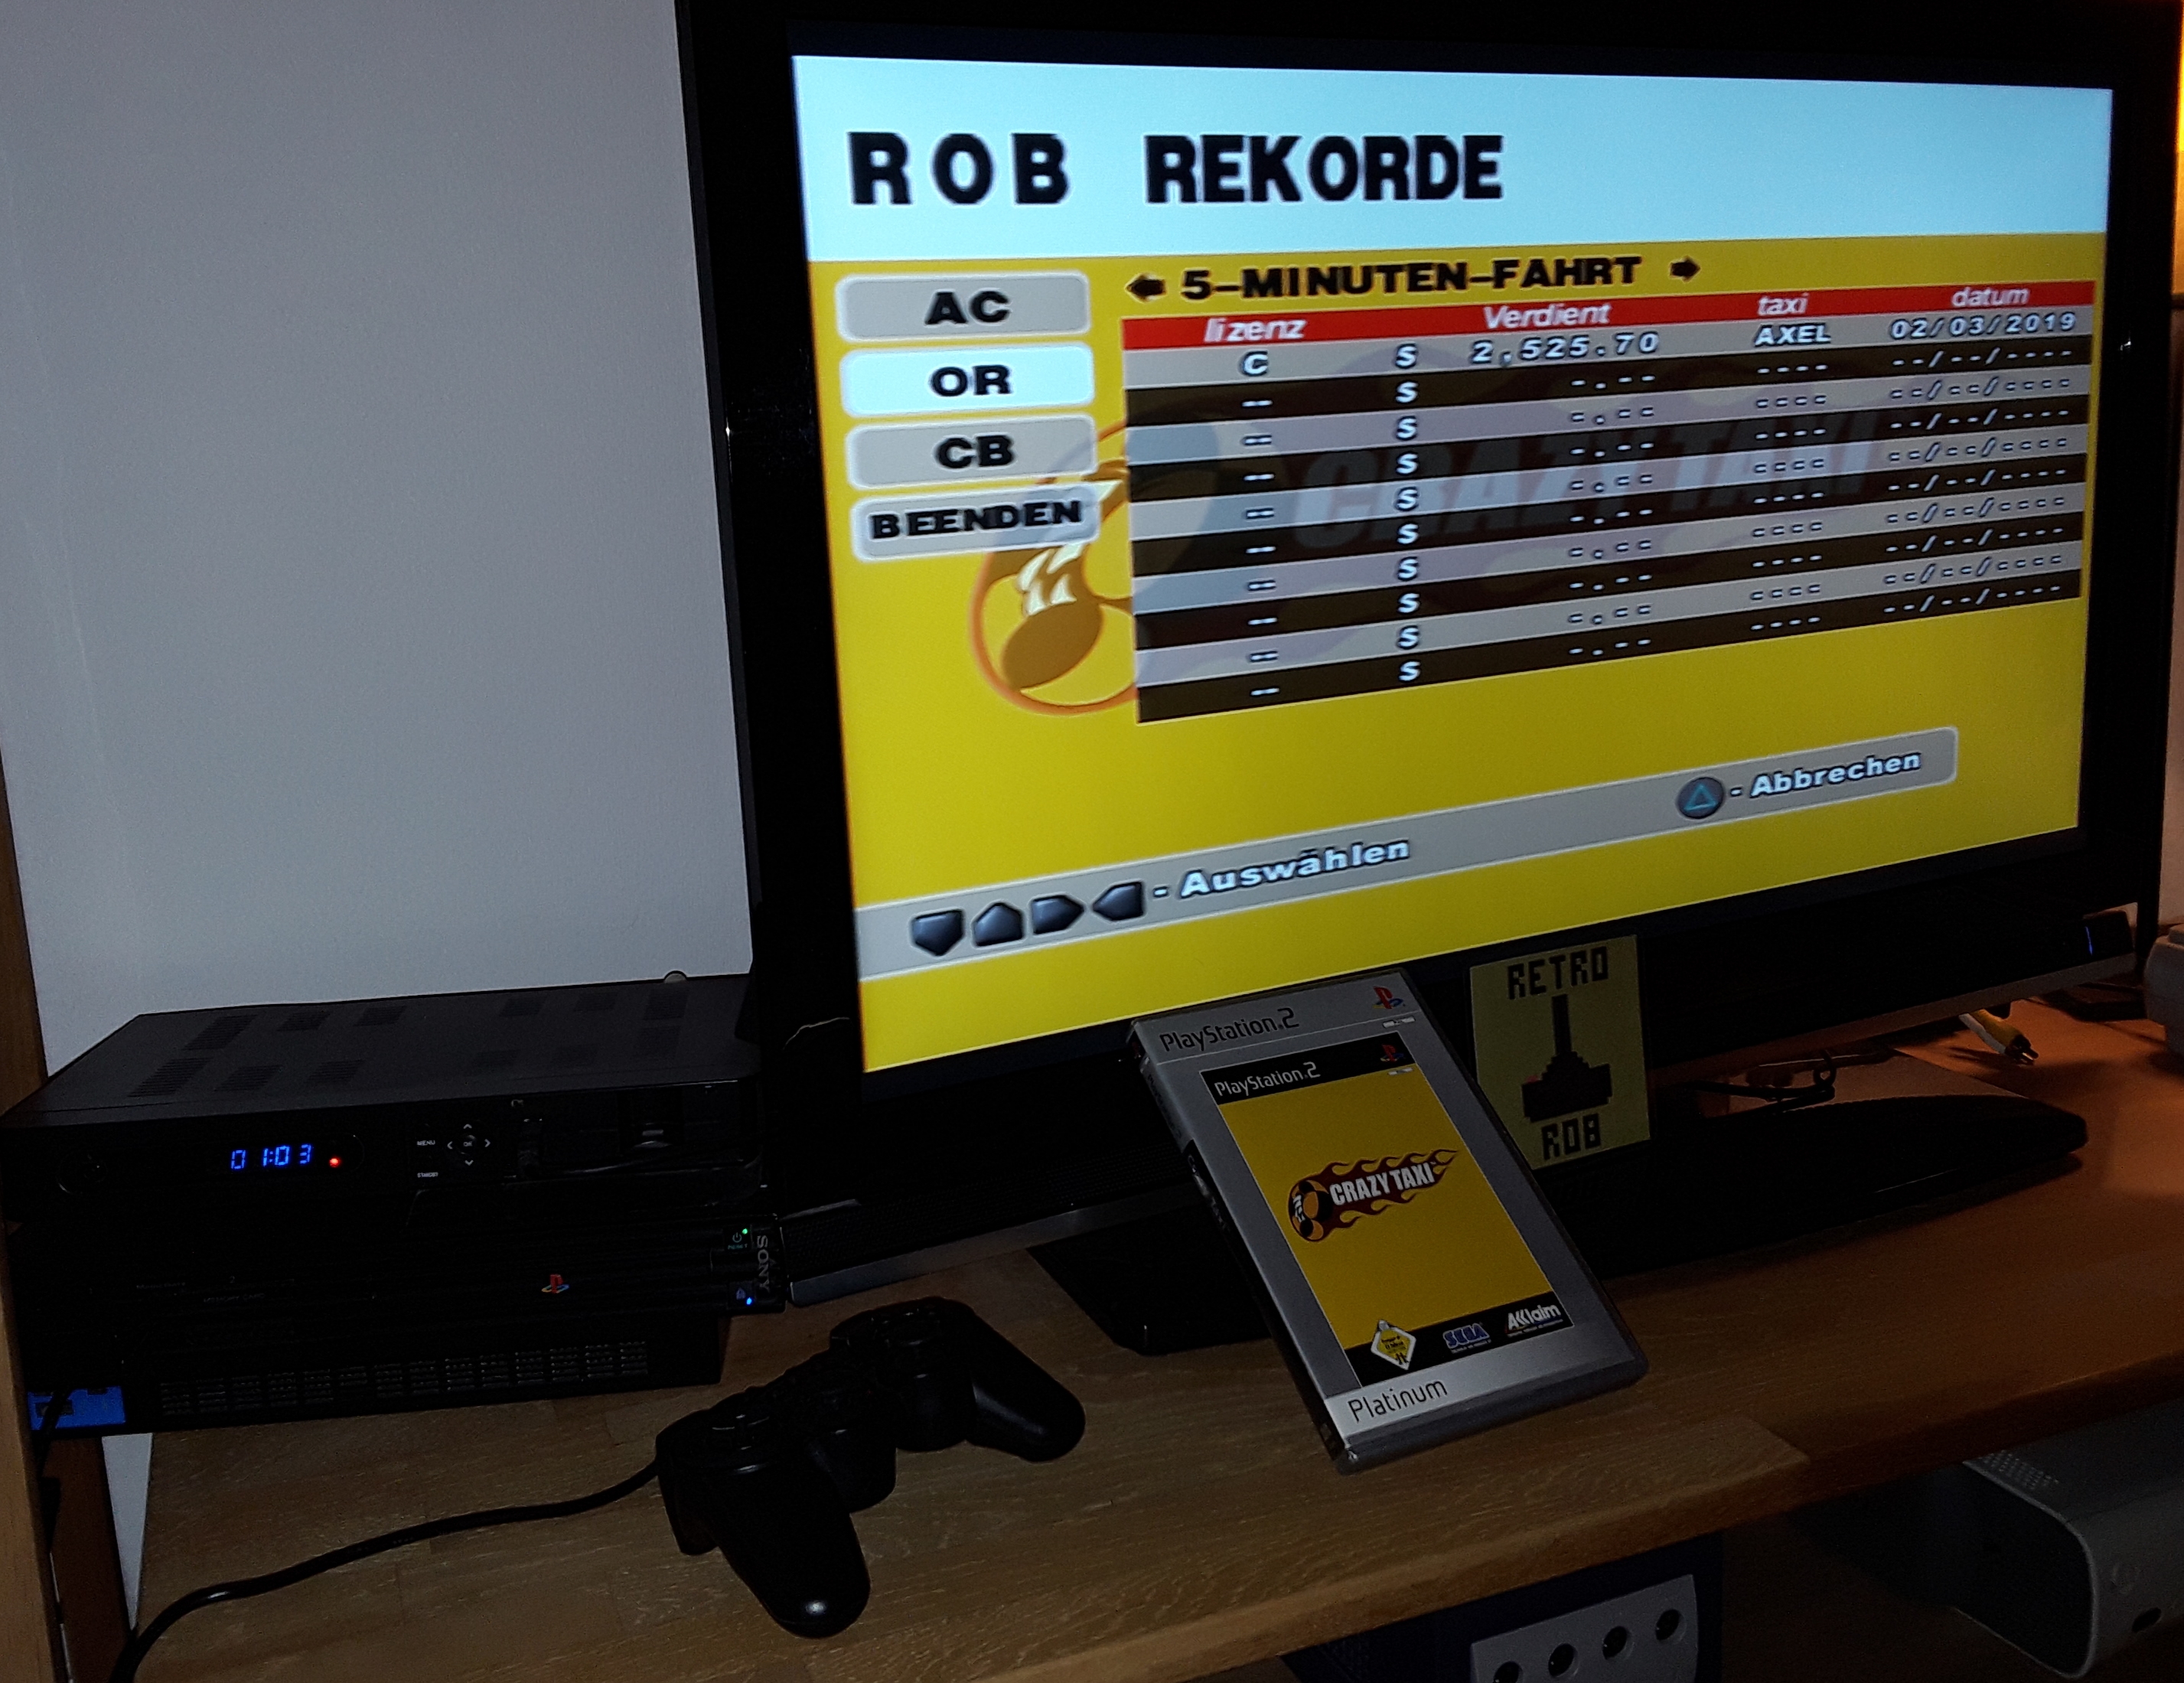 RetroRob: Crazy Taxi [Original/5 Minutes] (Playstation 2) 2,525 points on 2019-02-02 23:43:04